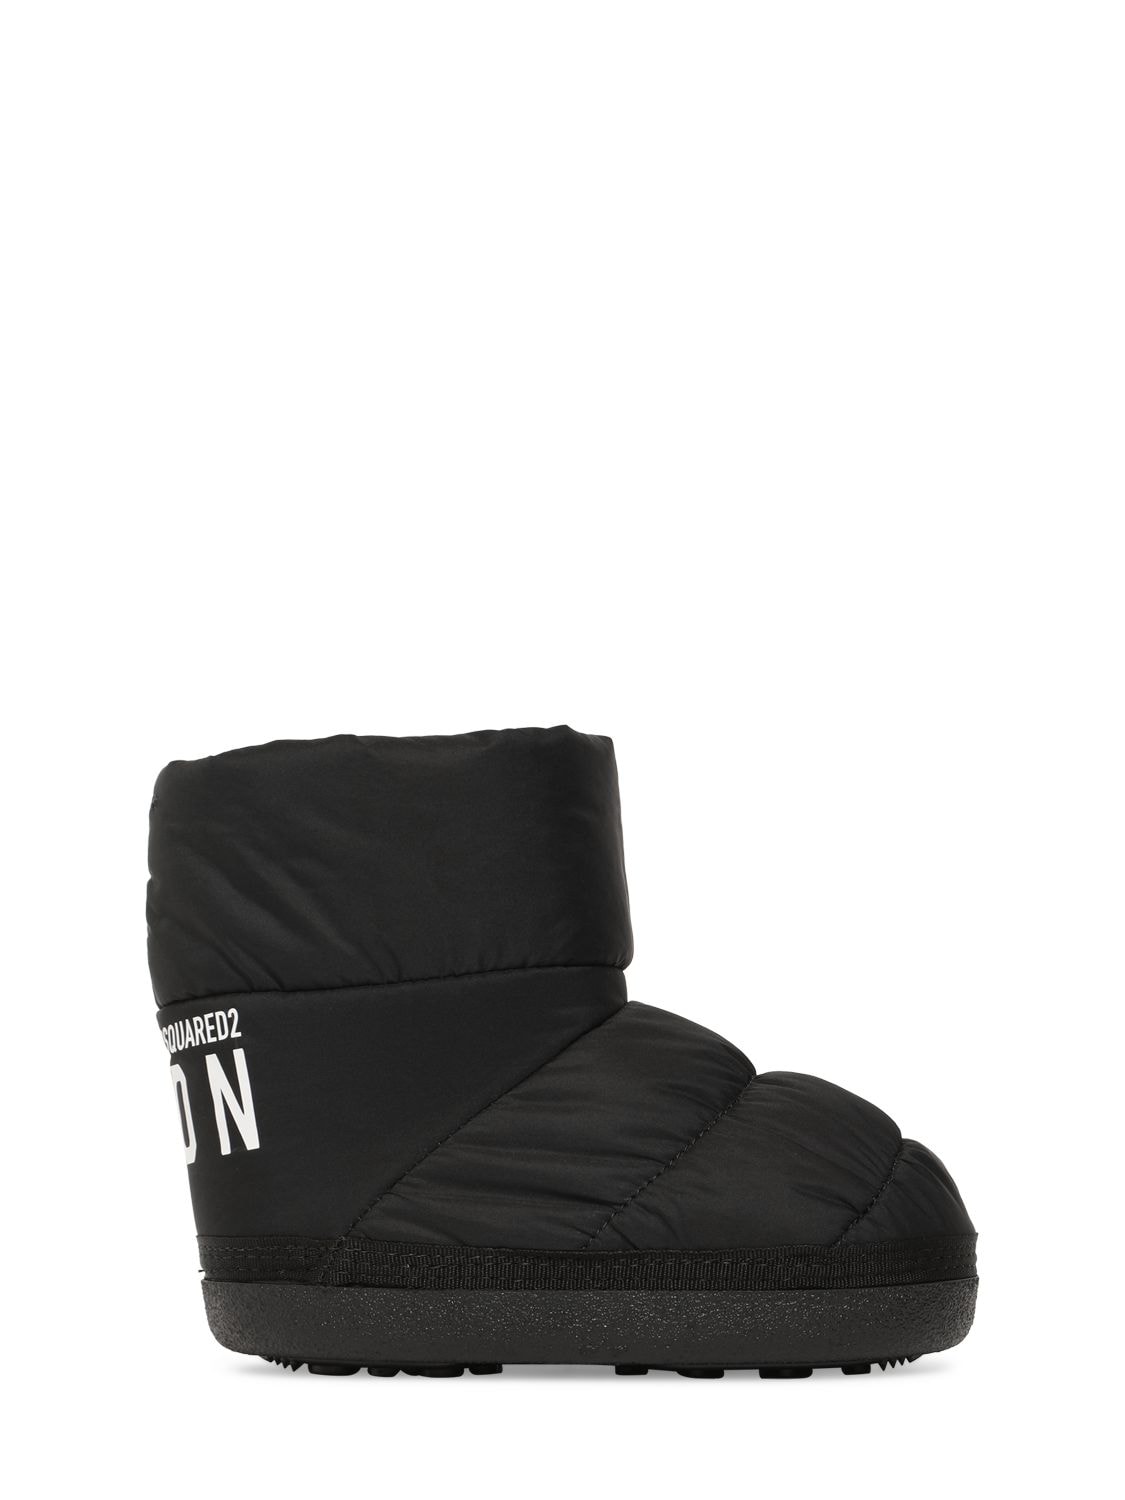 Dsquared2 Kids' Nylon Snow Boots In Black